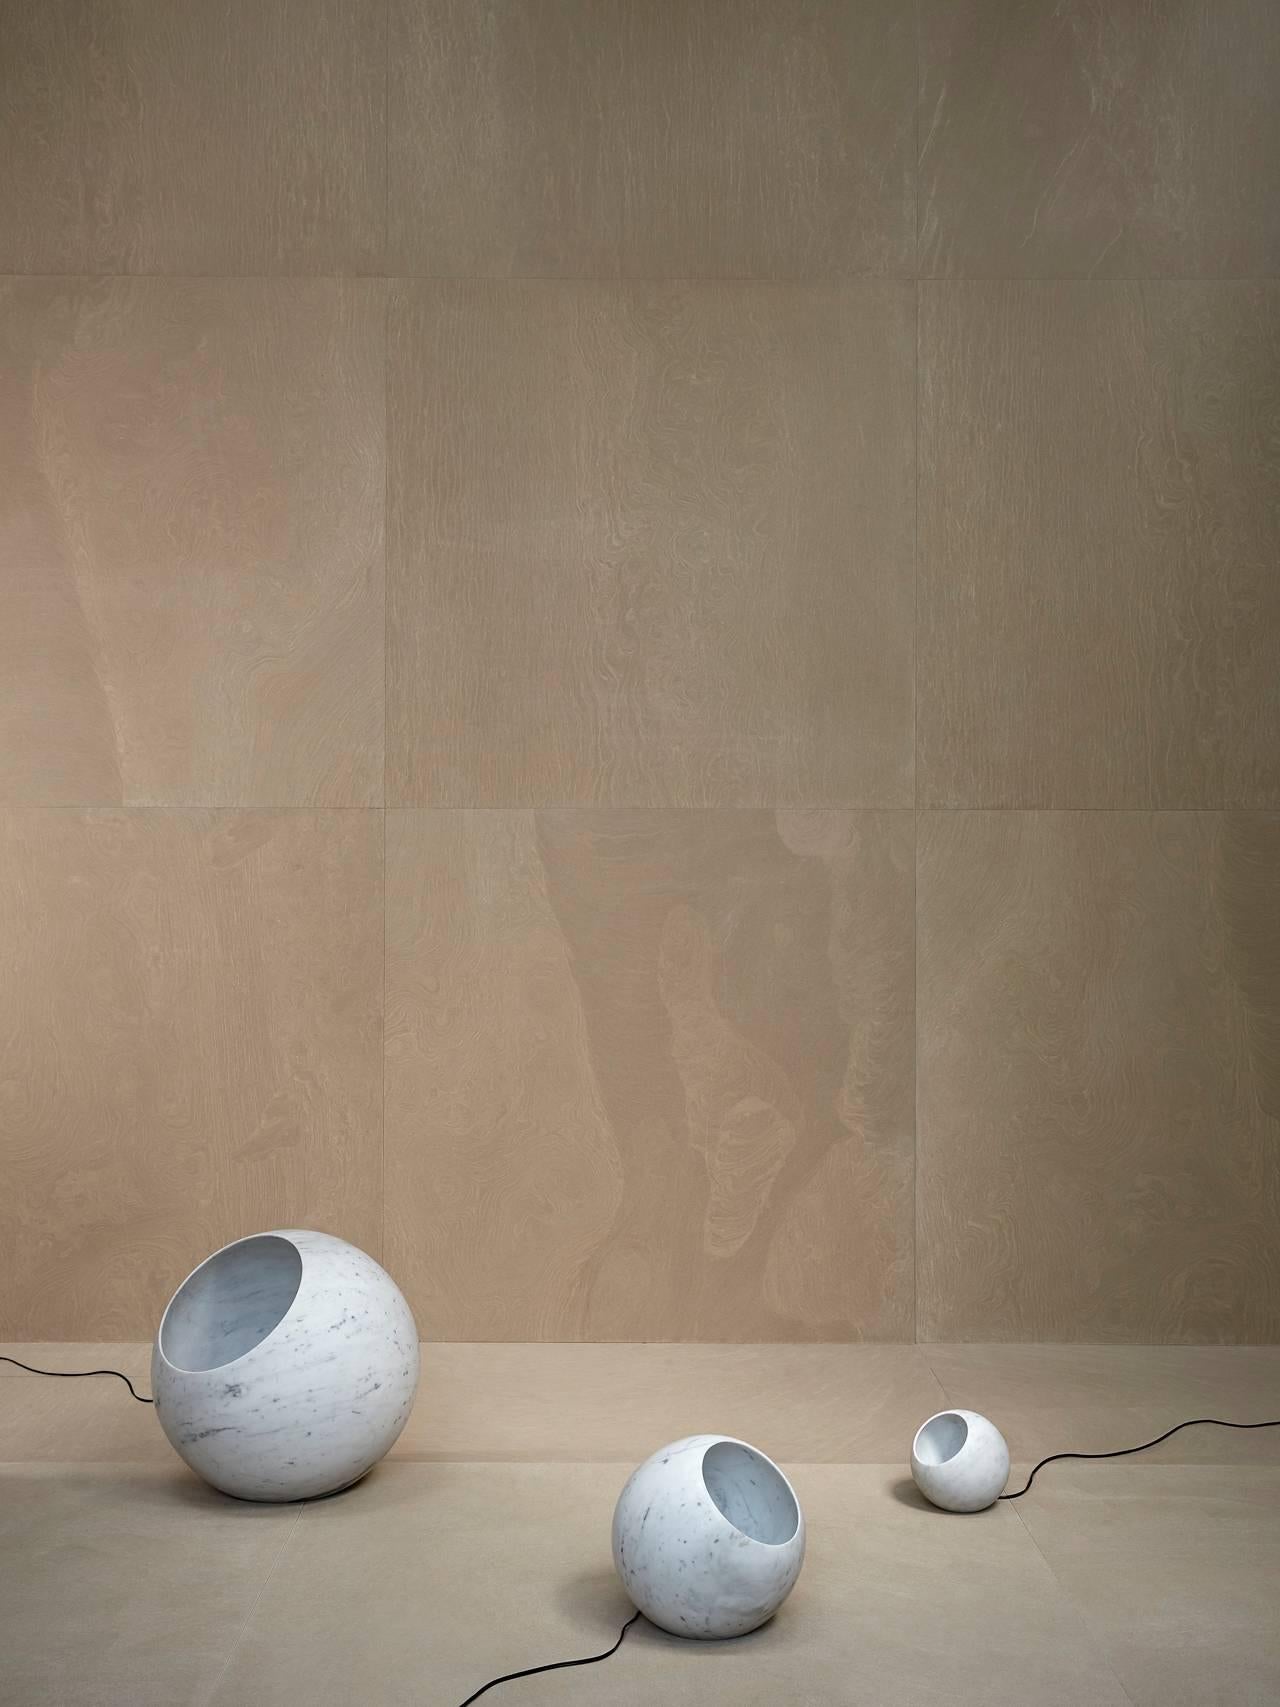 Salvatori Urano Spherical Table Lamp 18 in Bianco Carrara Marble by Elisa Ossino For Sale 1